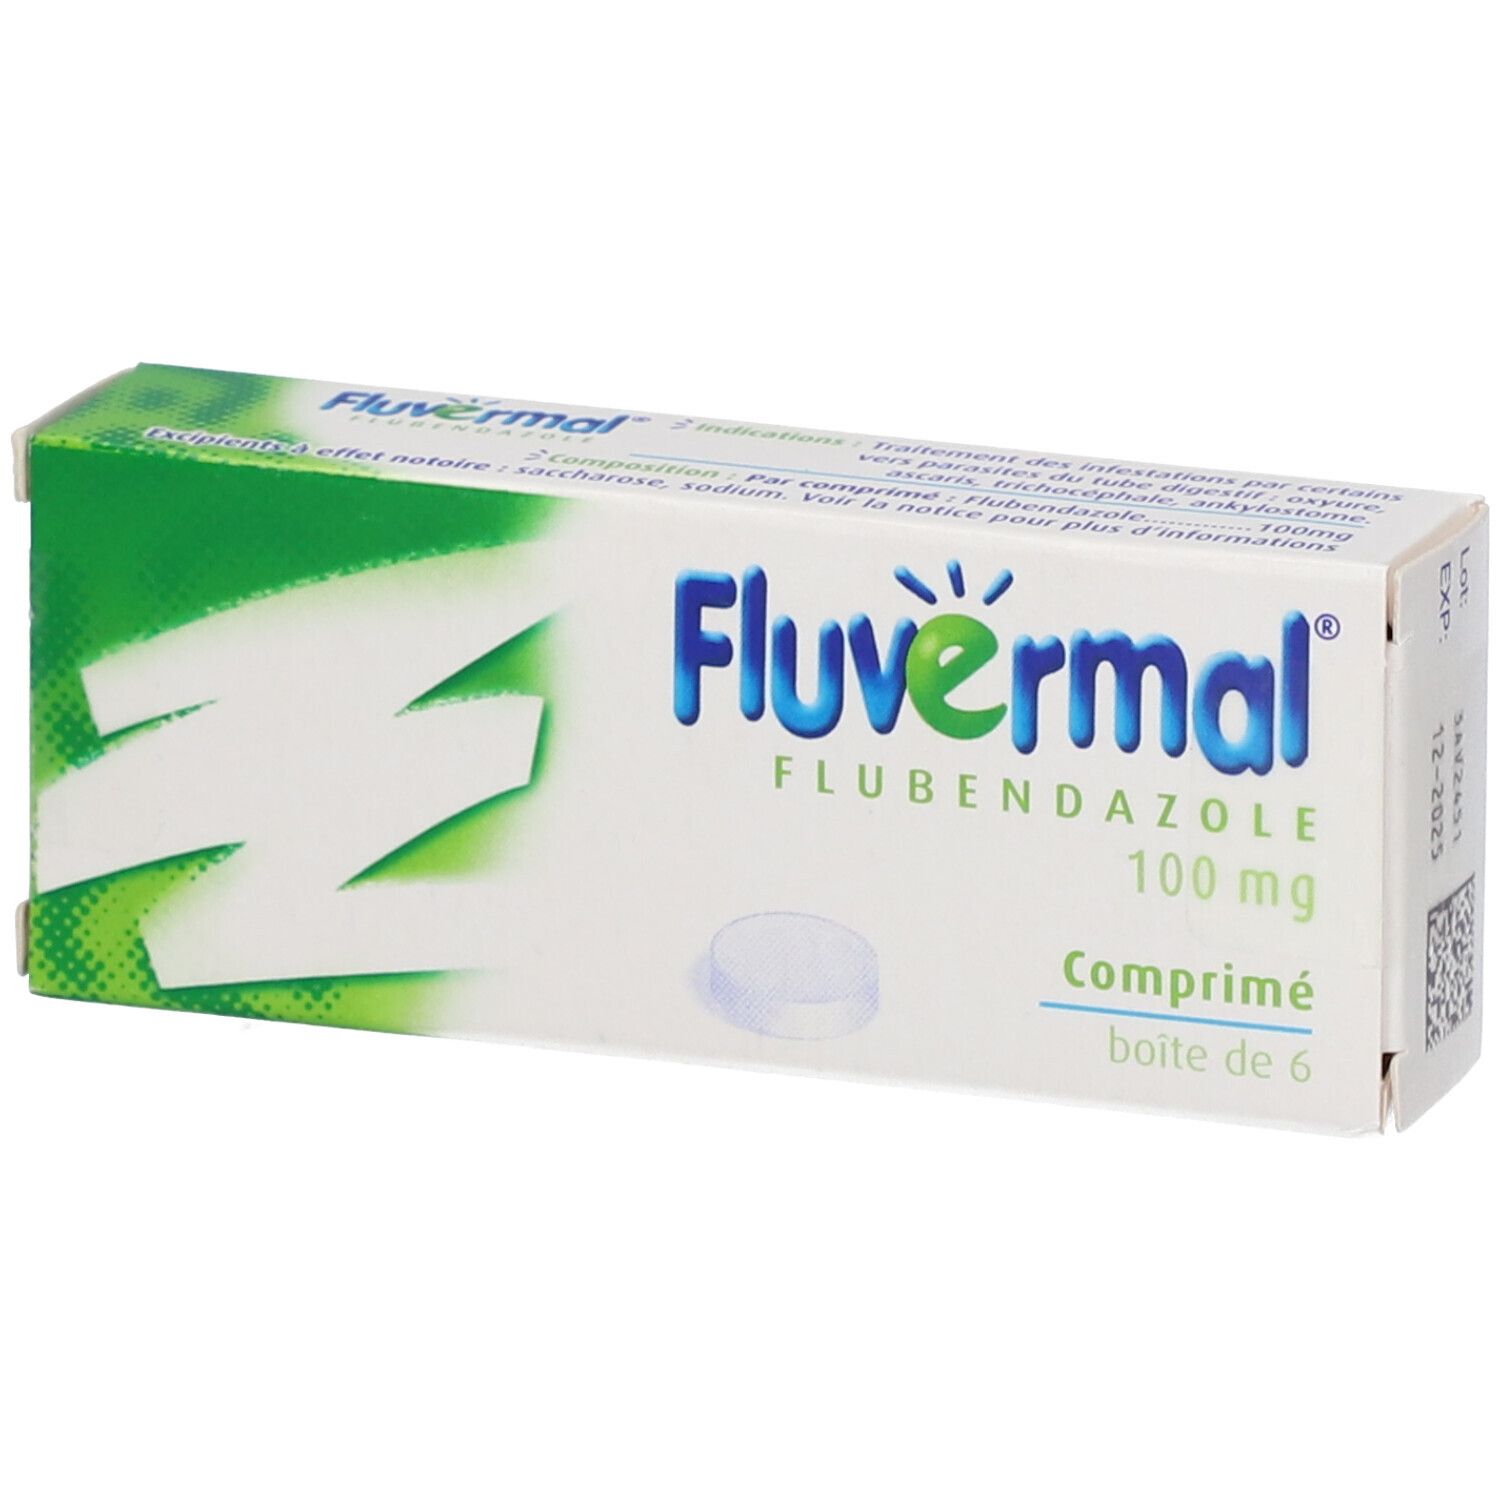 Fluvermal® 100 mg